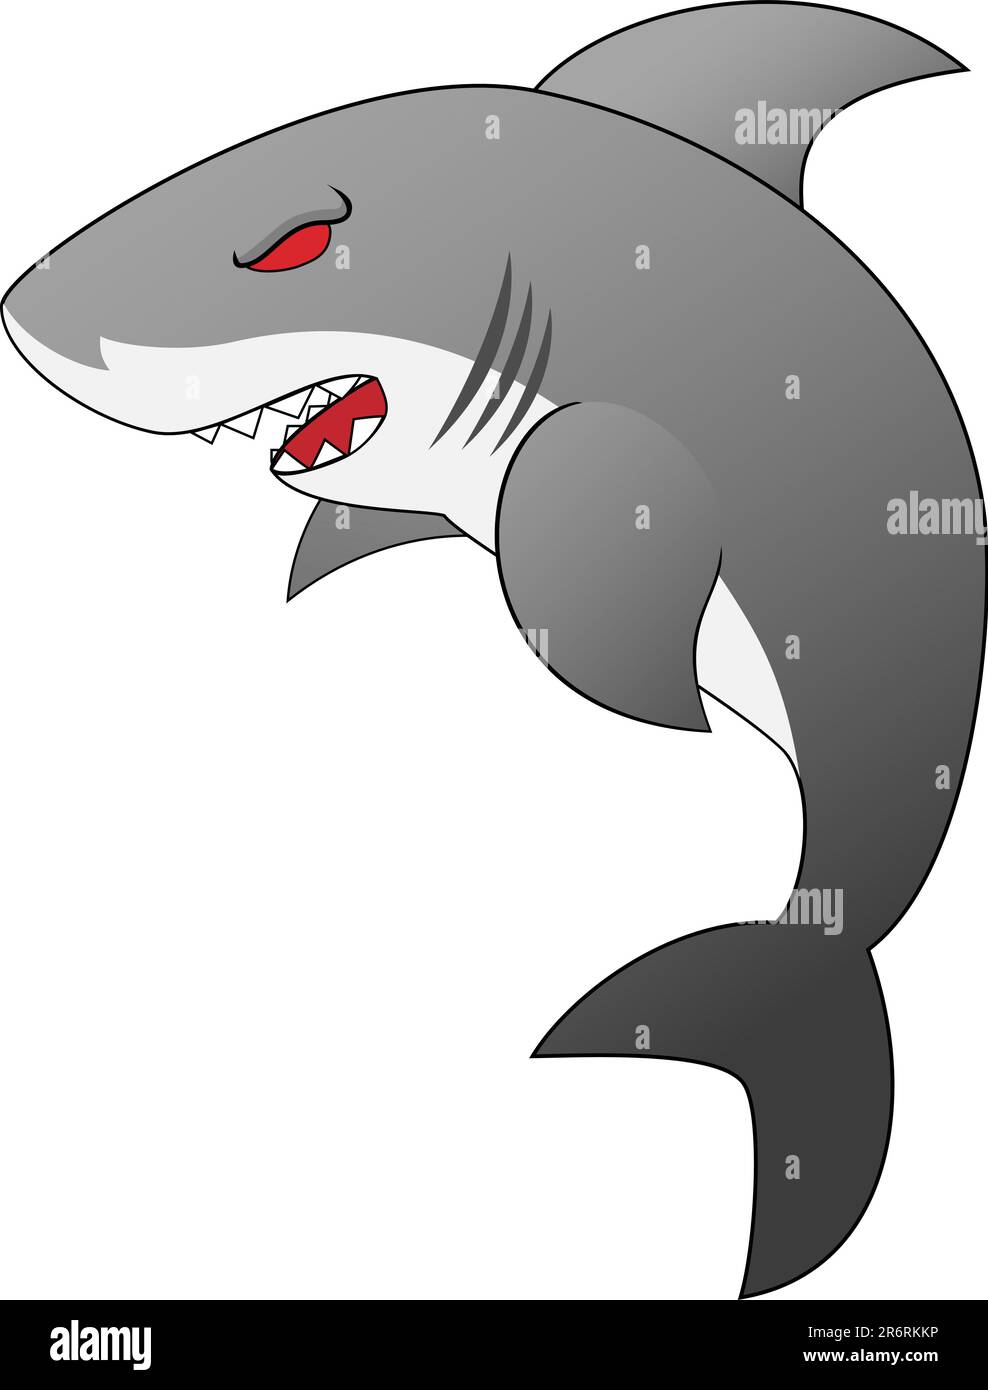 Illustration of An Angry Looking Cartoon Shark Stock Vector Image & Art ...